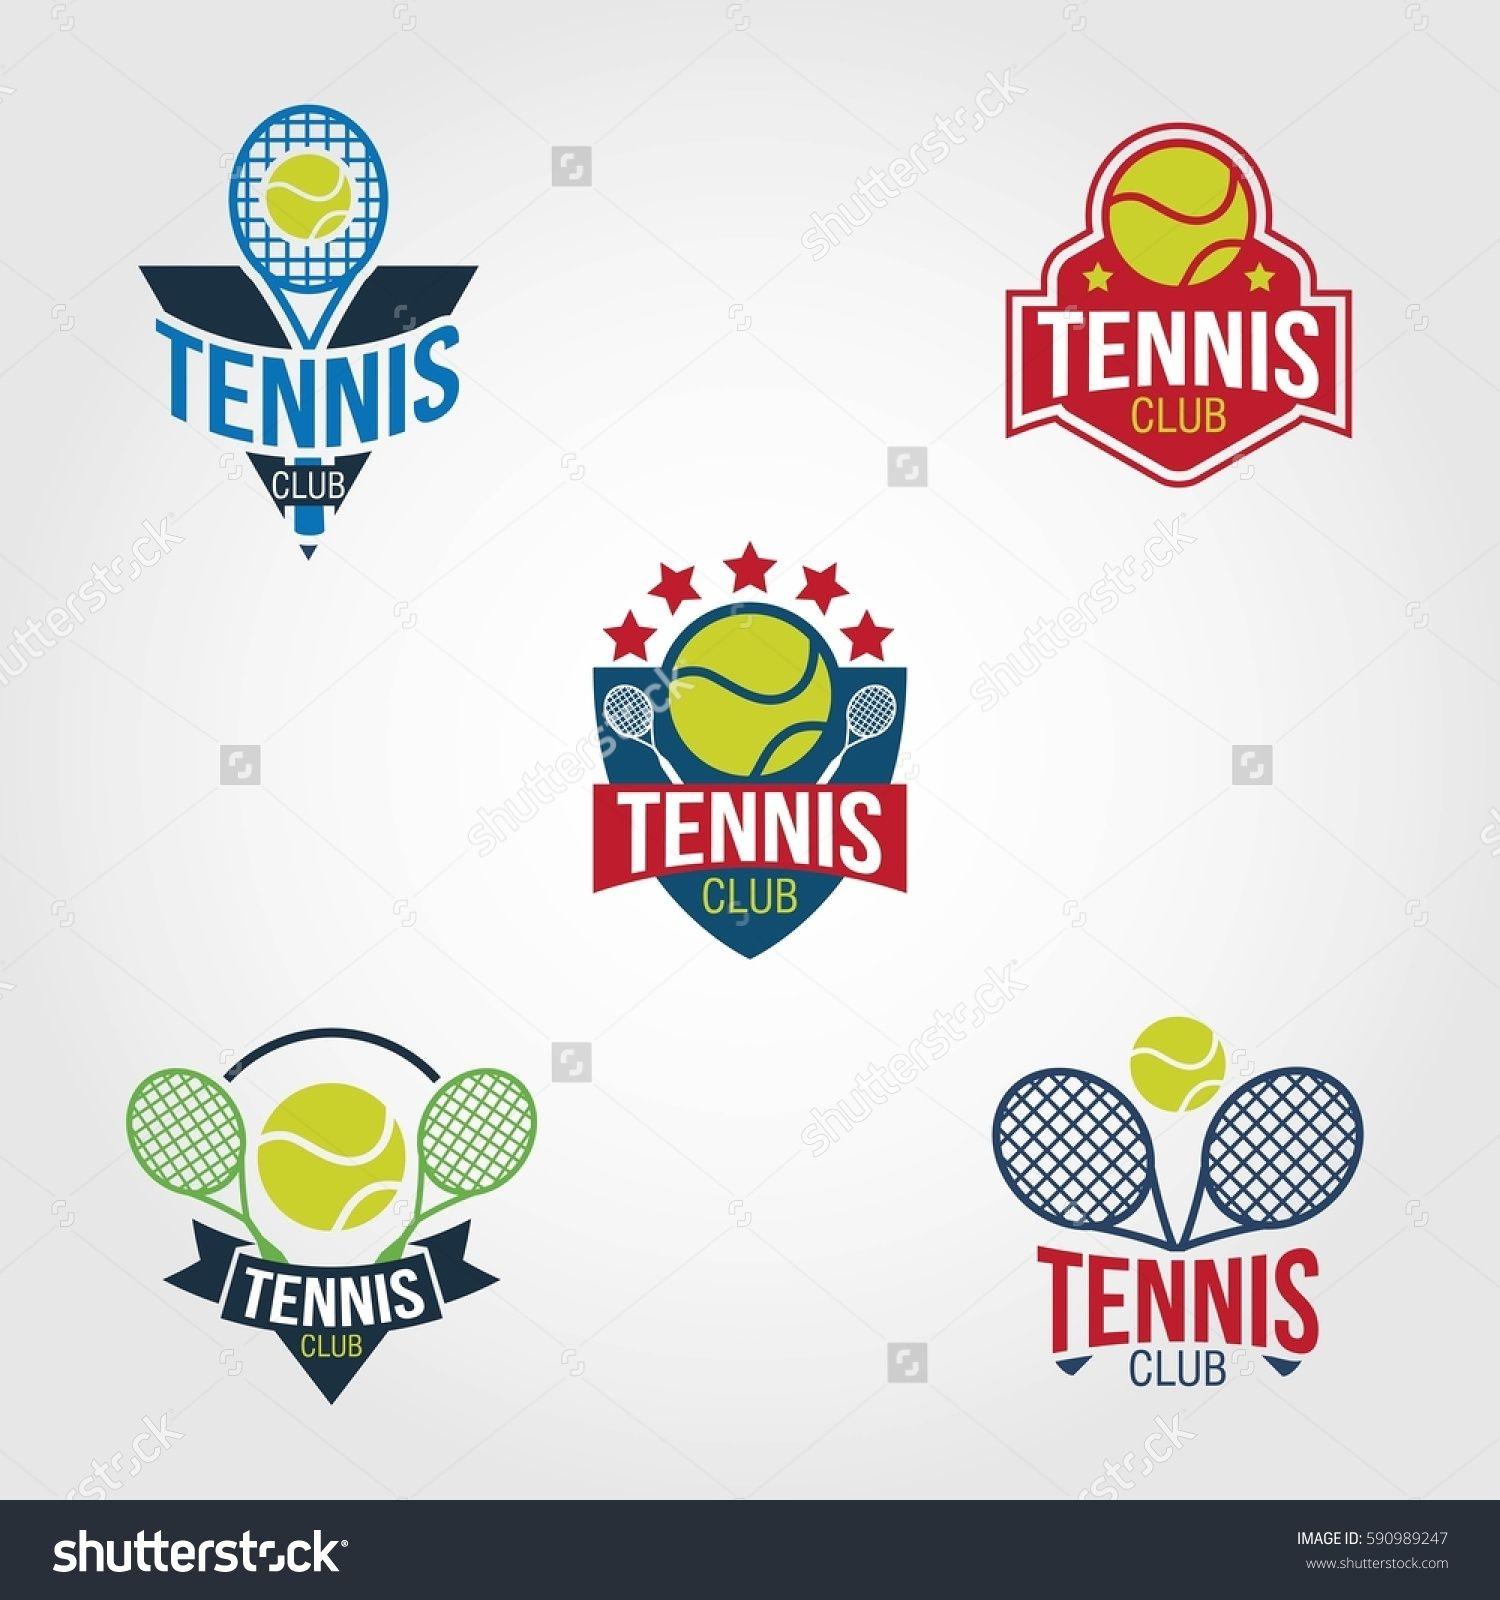 Tennis Logo - Tennis Logo Design Vector. Tennis. Tennis shirts, Tennis, Tennis wear